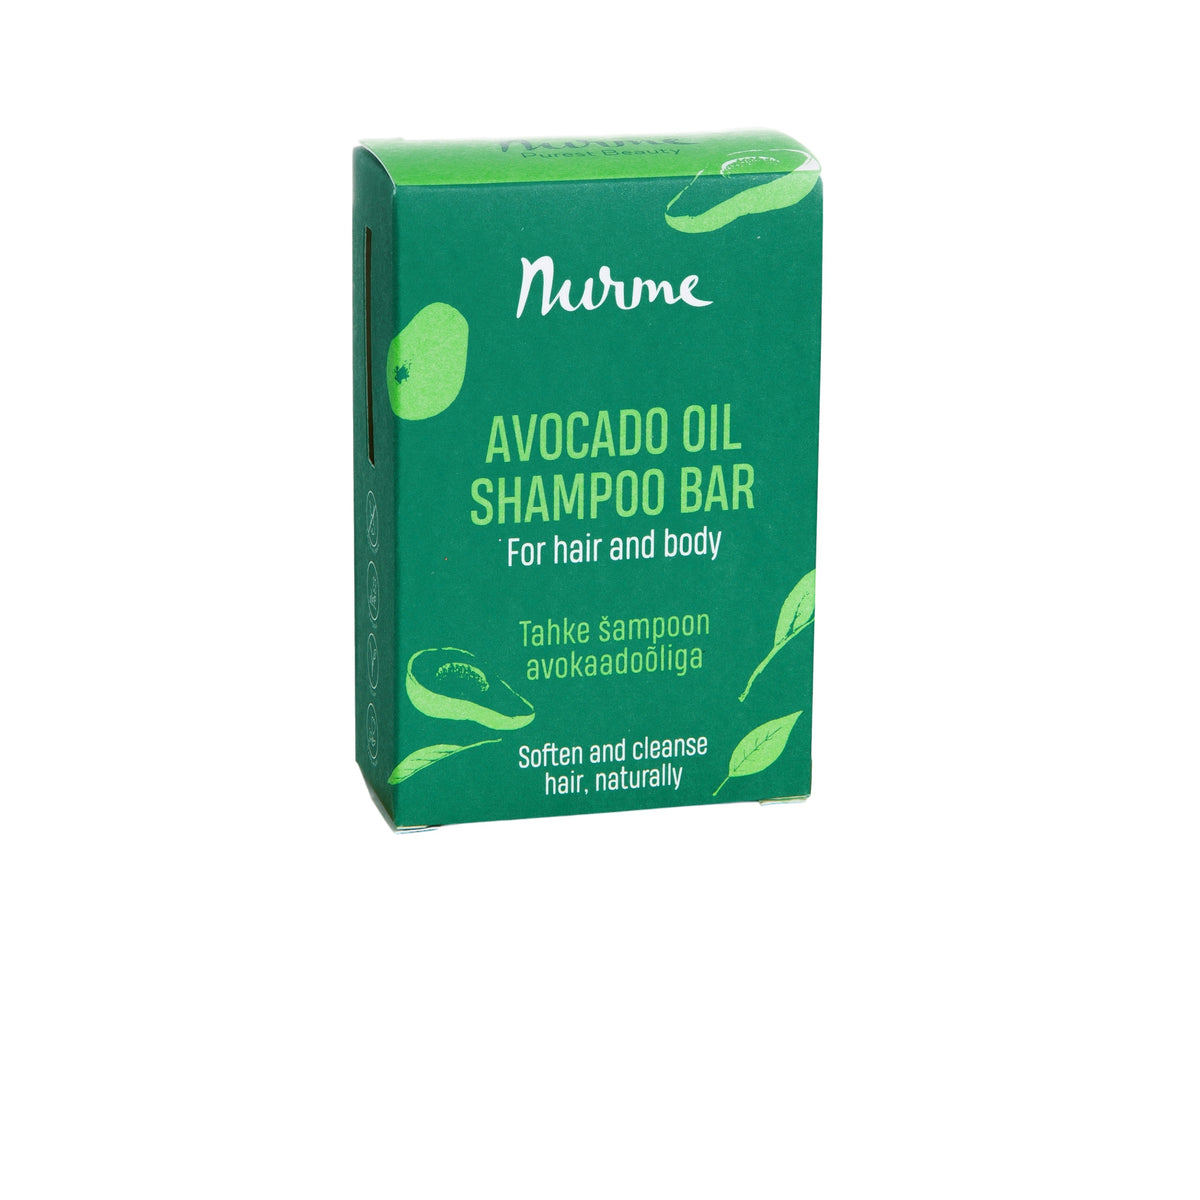 Nurme Avocado Oil Shampoo Bar - Avokadoöljy Palashampoo 100 g - Päiväys 11/2024